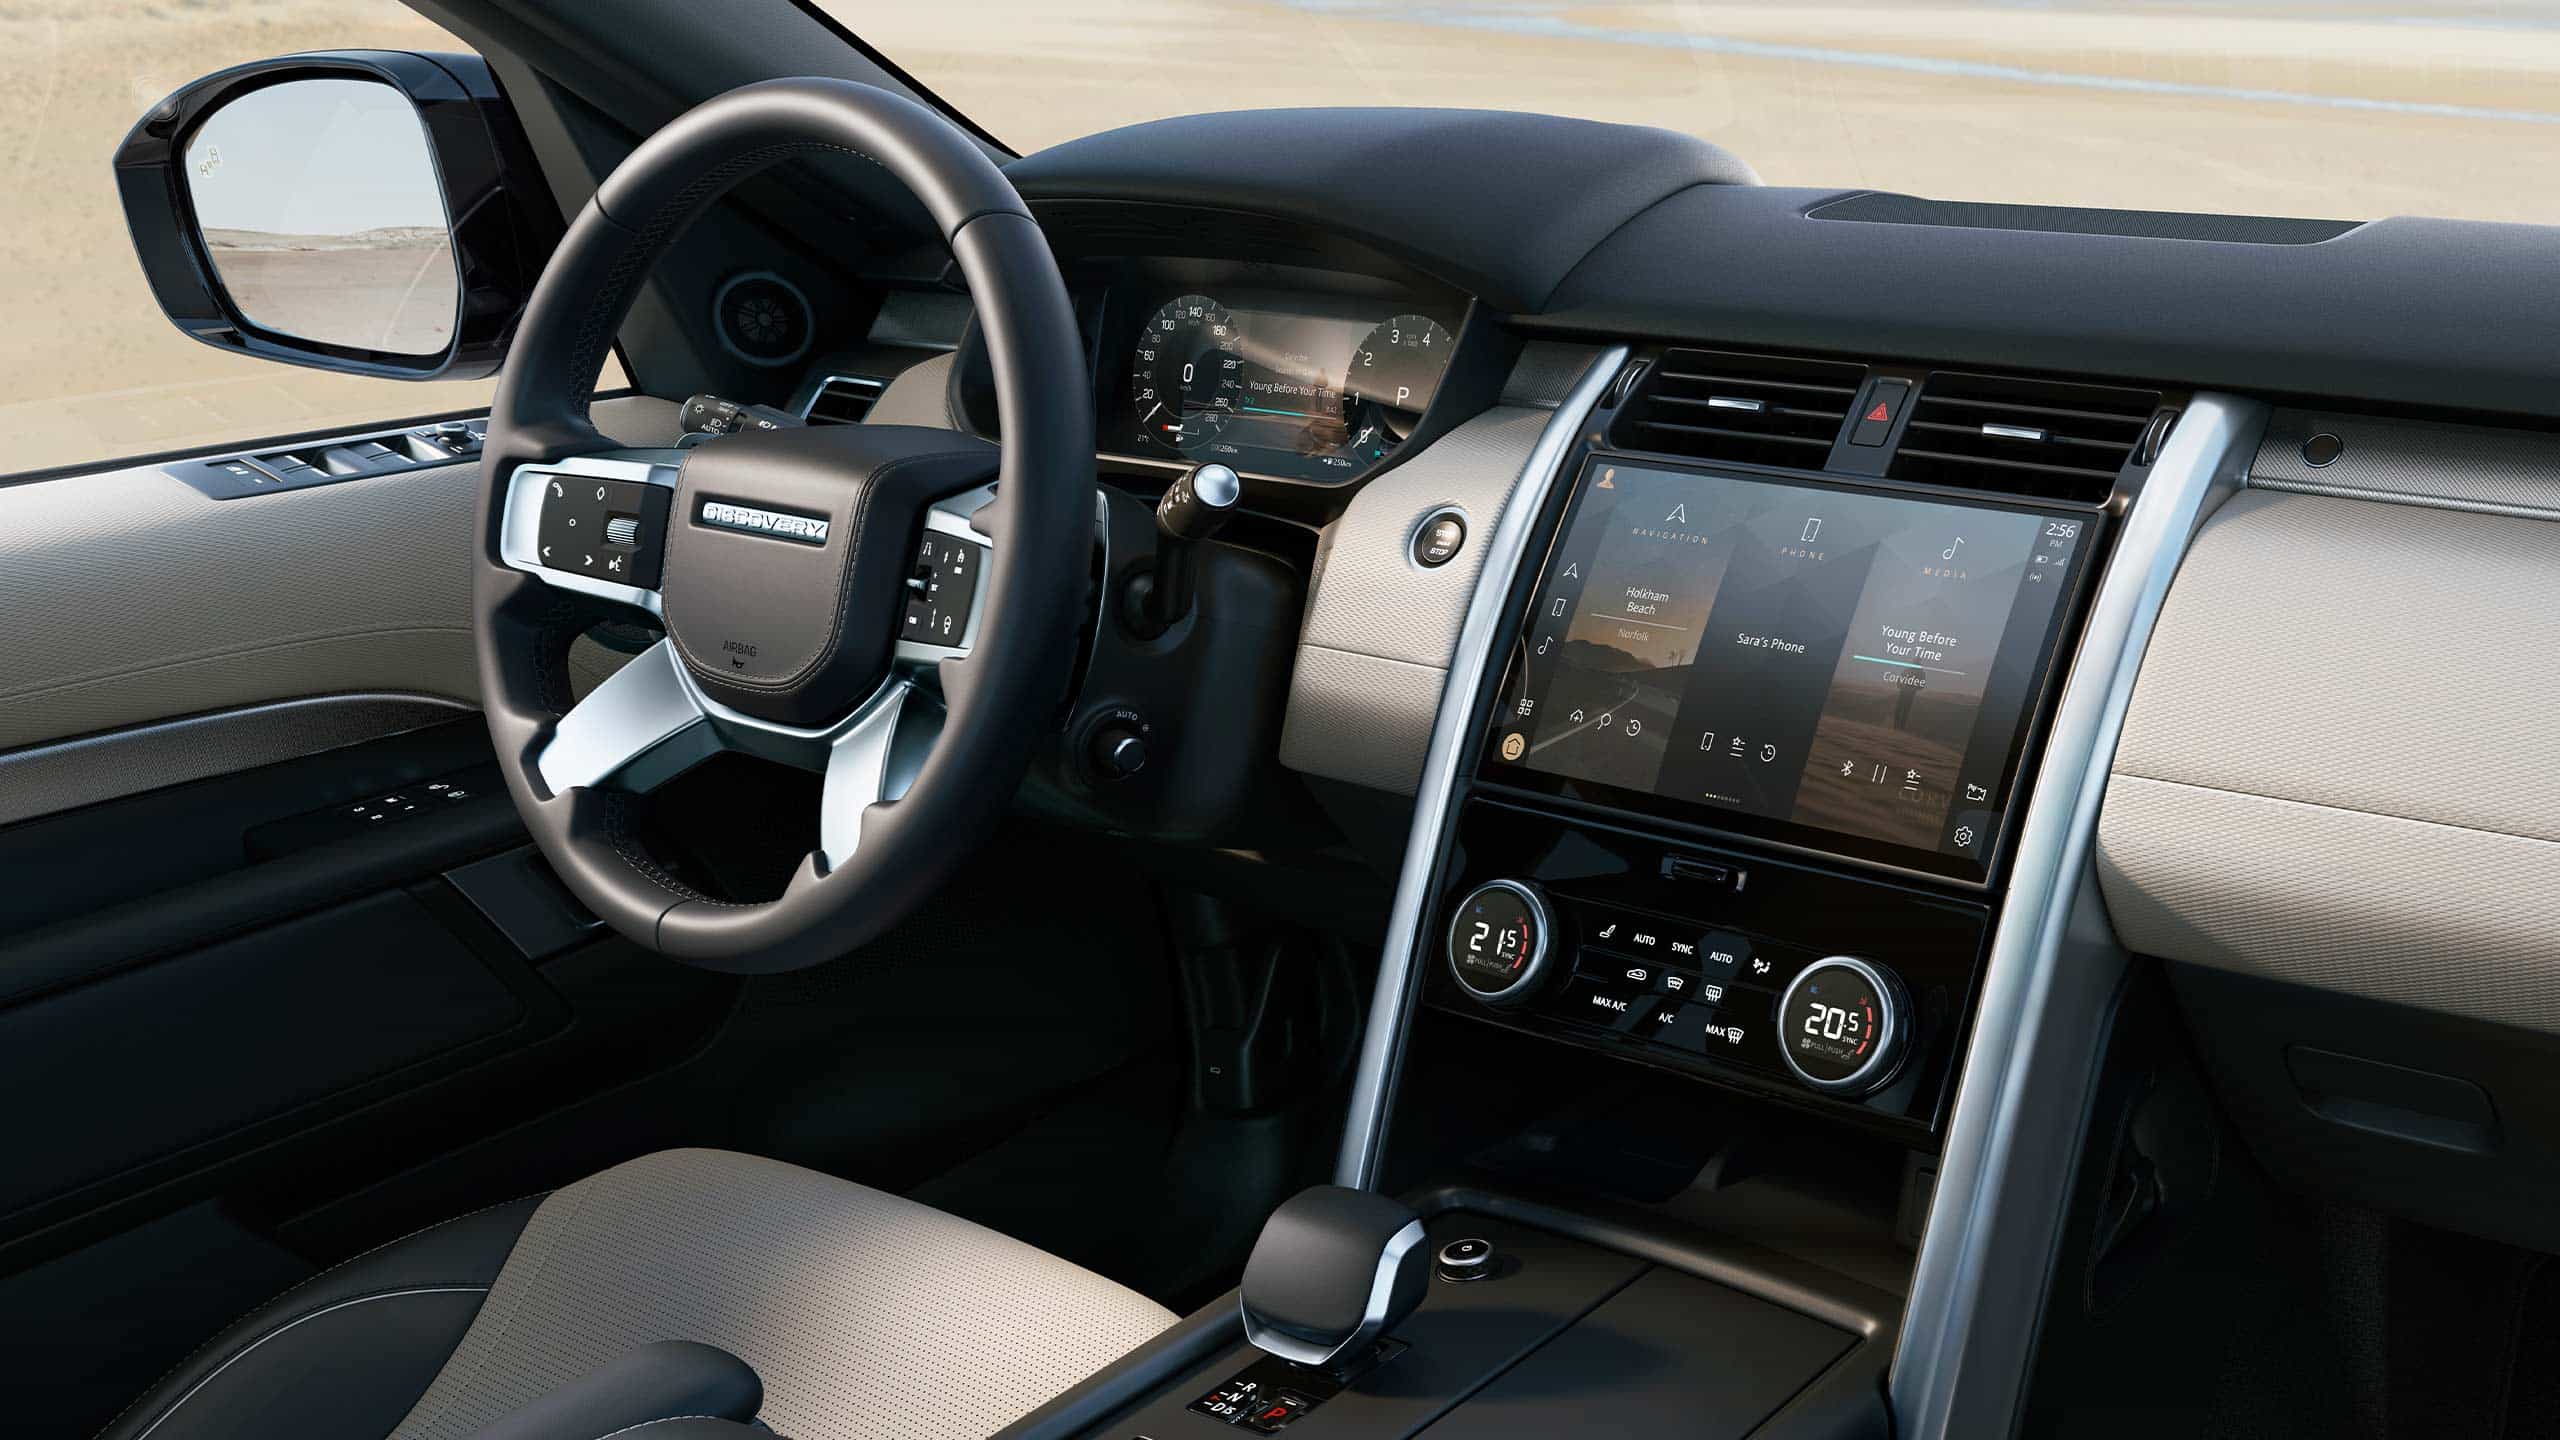 Range Rover Discovery interior